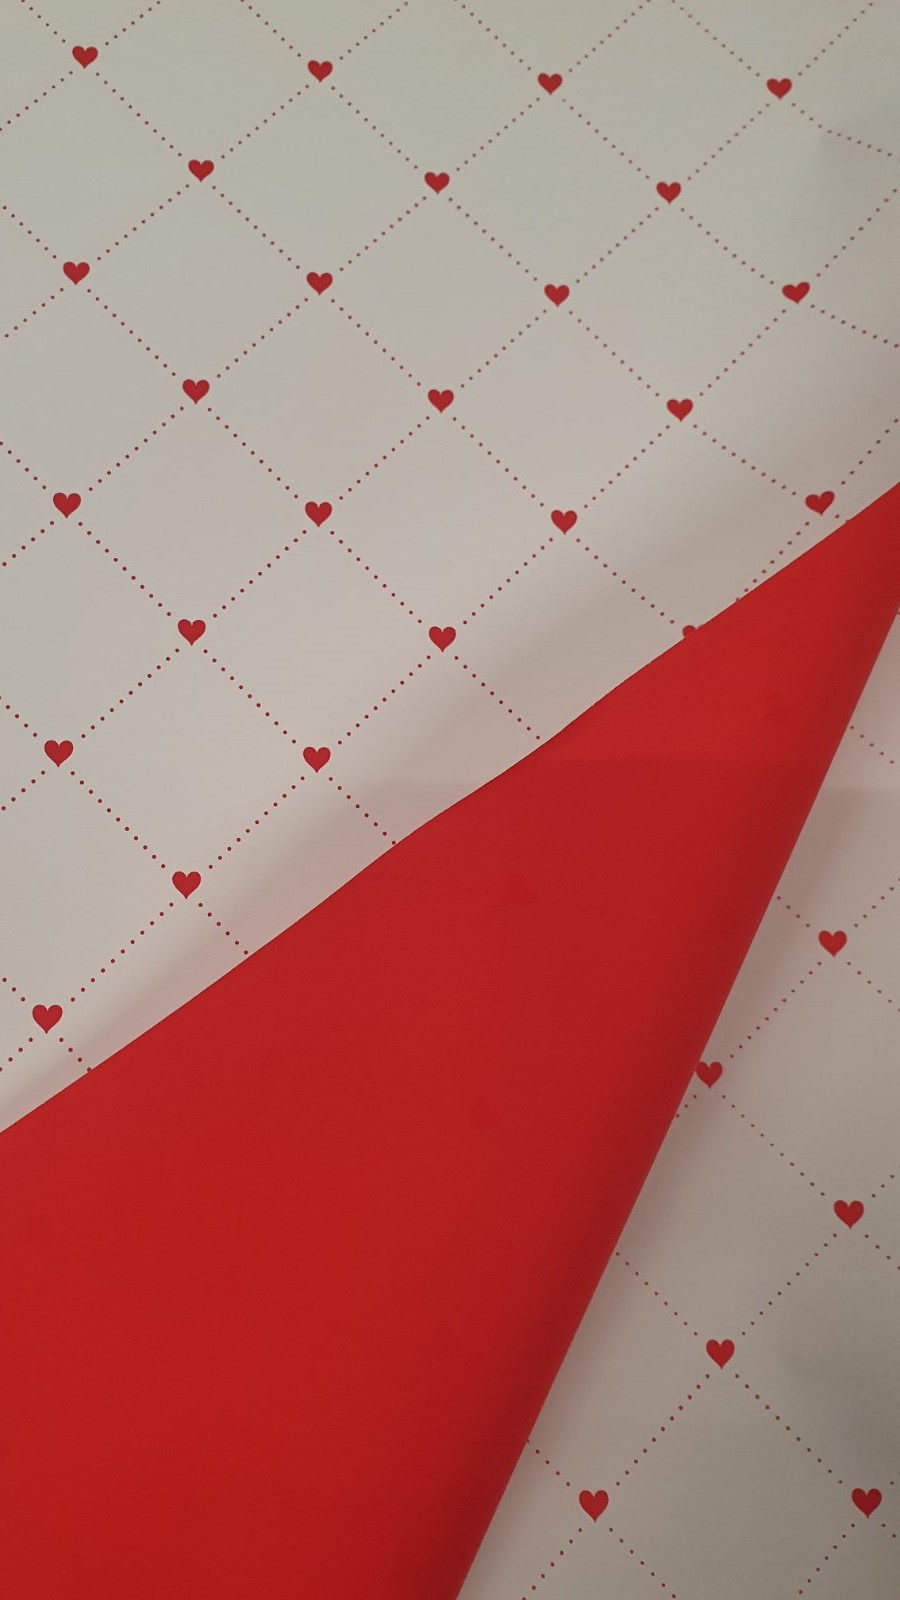 crveno-beli papir sa srcima i crtiacam